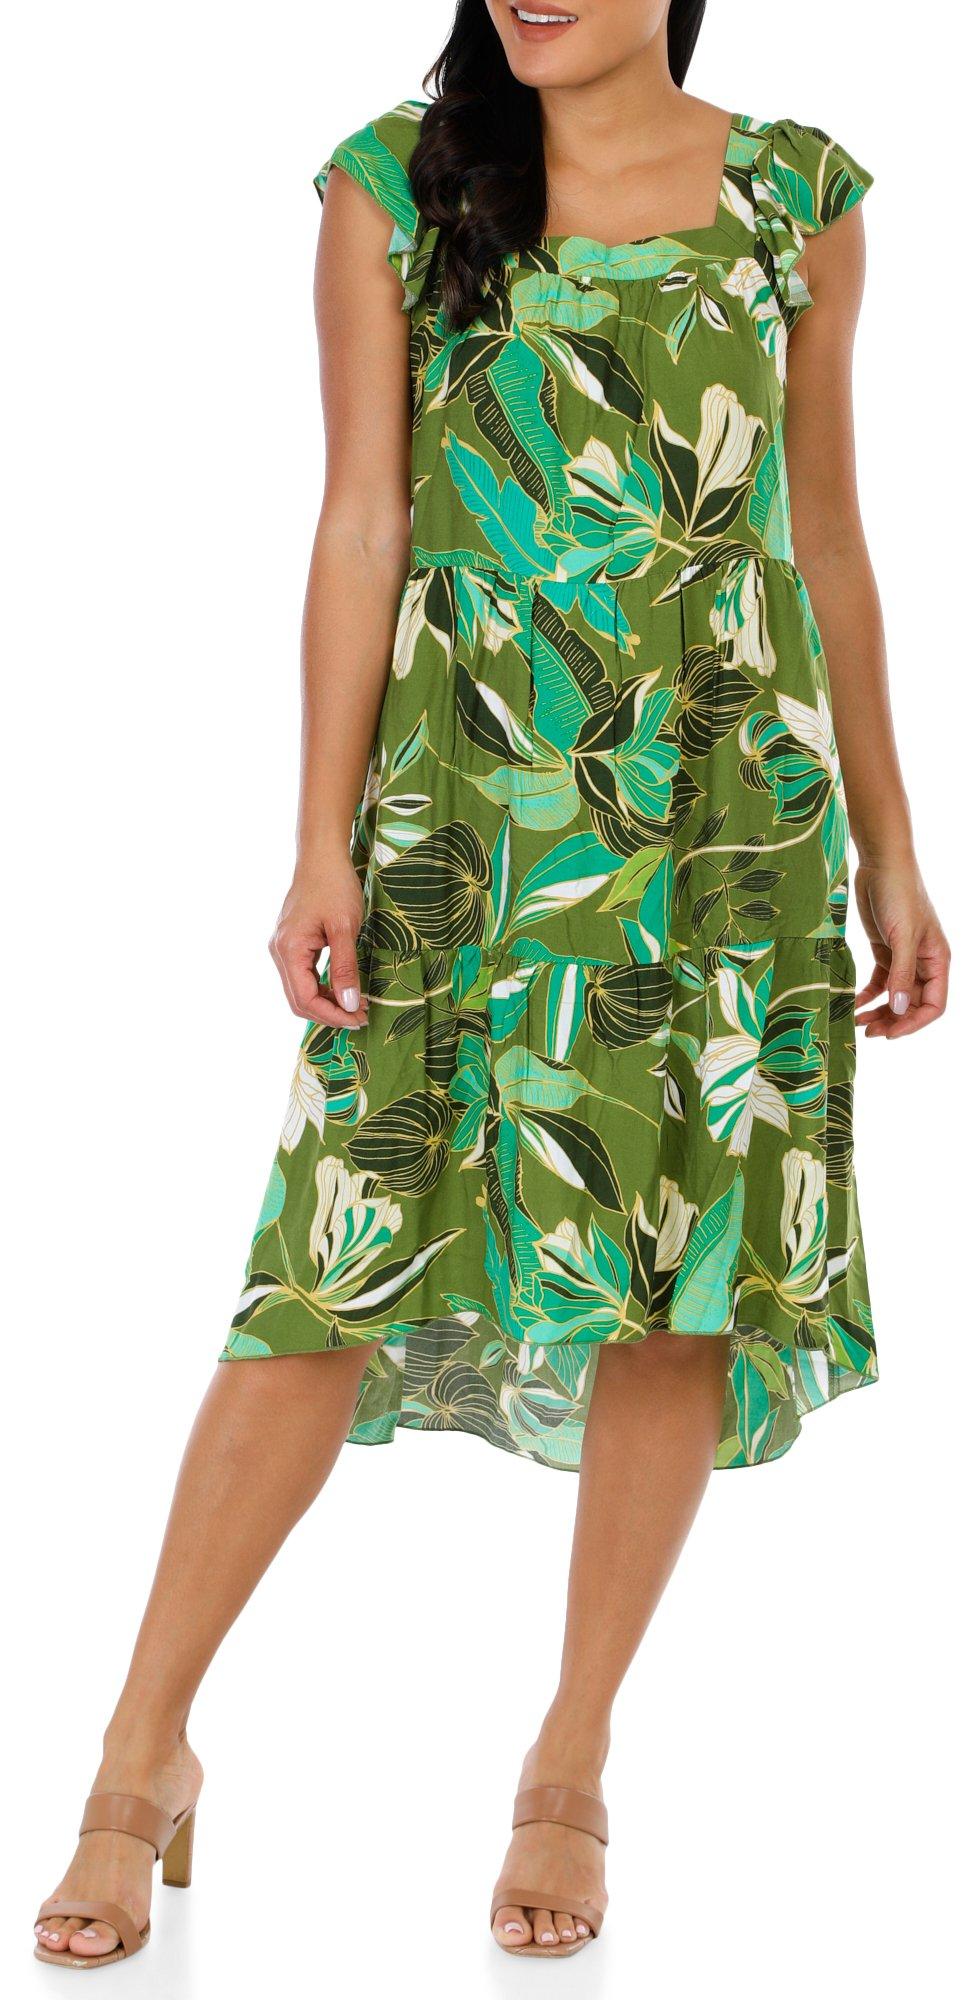 Women's Tropical Floral Print Dress